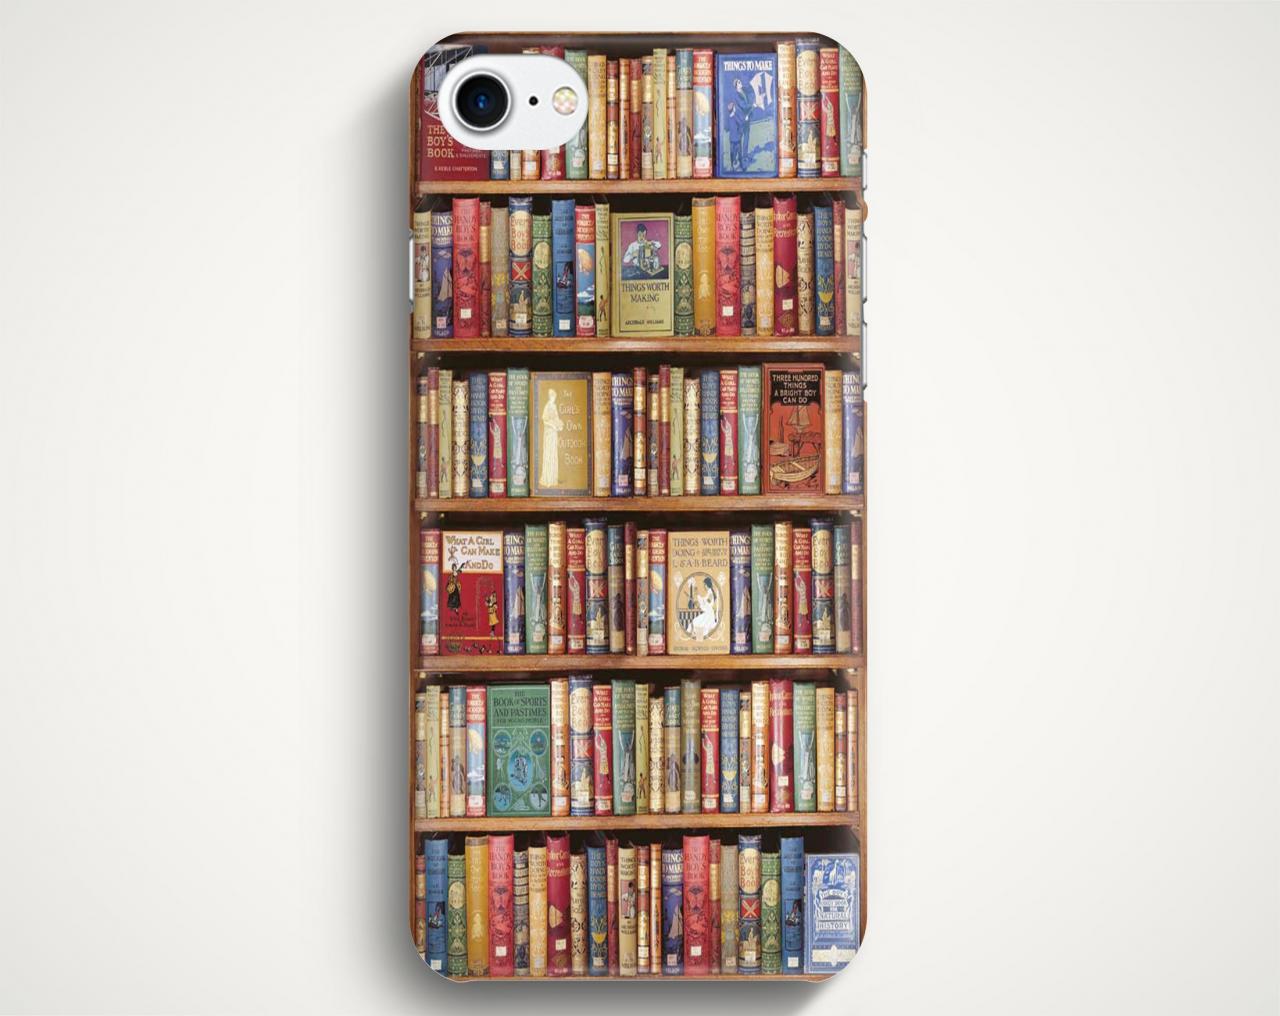 Bookshelf Case For Iphone 7 Iphone 7 Plus Samsung Galaxy S8 Galaxy S7 Galaxy A3 Galaxy A5 Galaxy A7 Lg G6 Lg G5 Htc 10